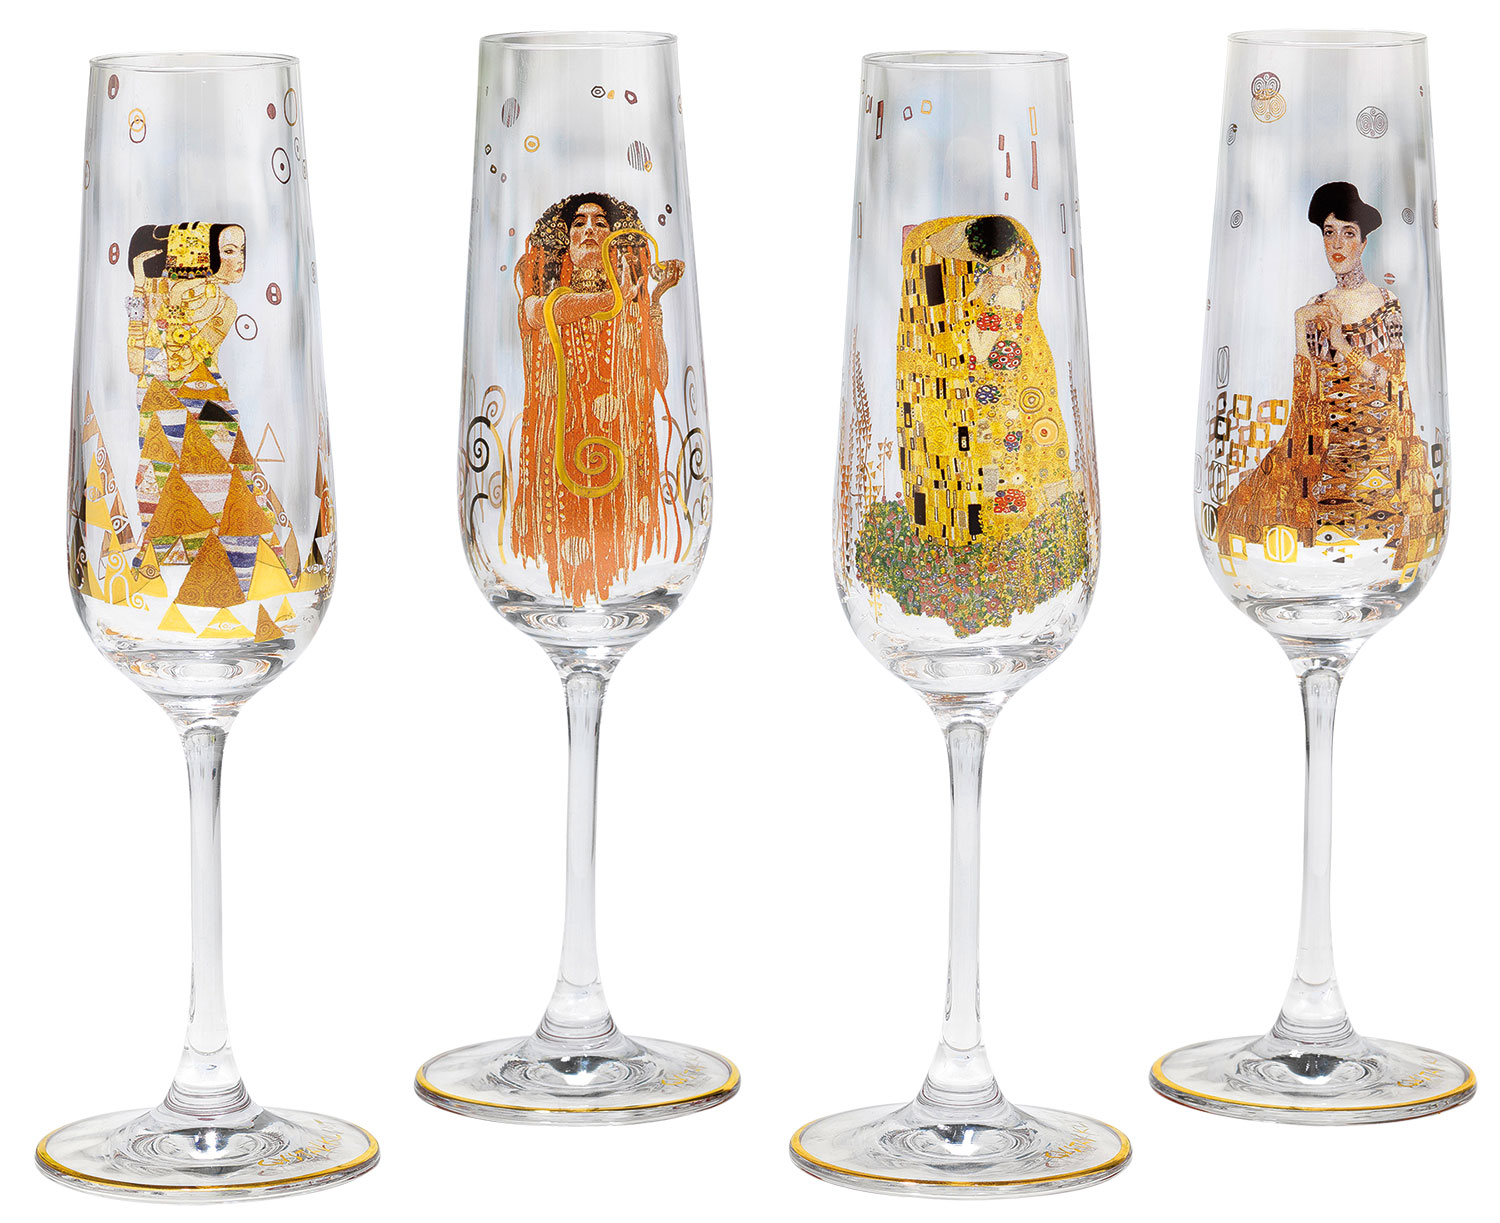 Set of 4 champagne glasses by Gustav Klimt